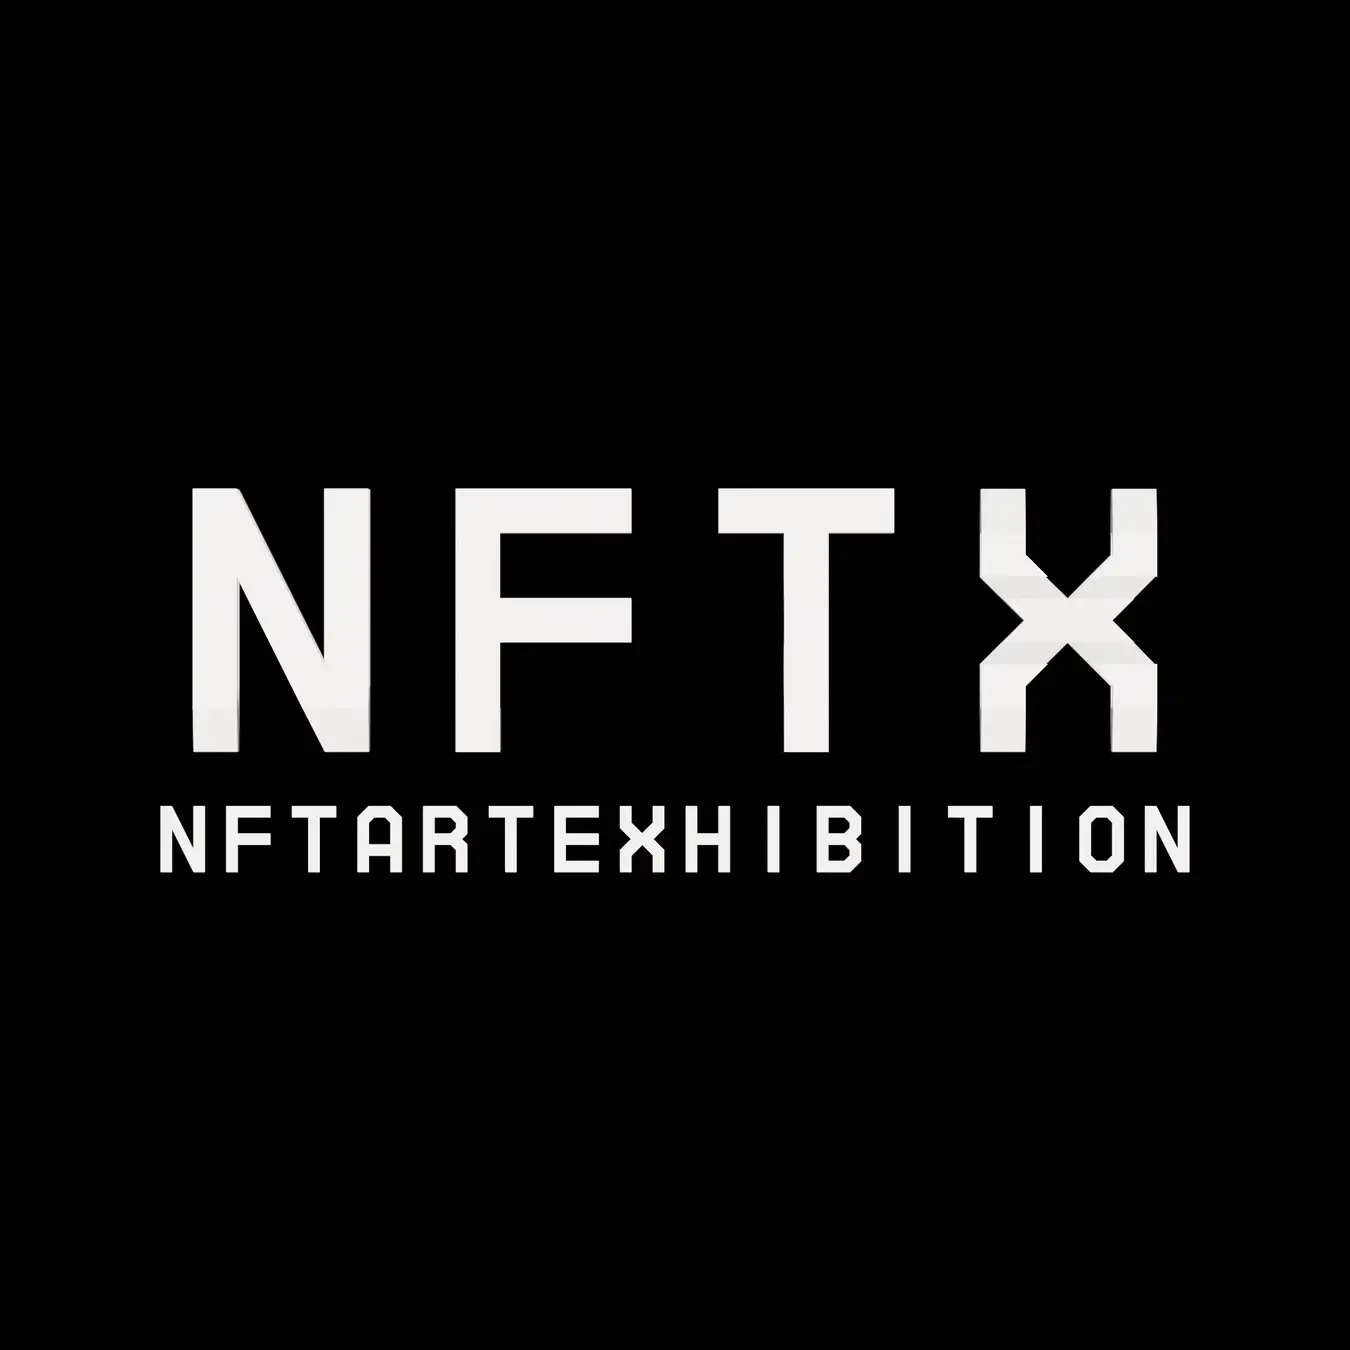 NFT出品代⾏サービス「CryptolessNFT」、NFTクリエイター向けプレスリリース代行サービスを割引価格で提供開始。年末までの期間限定で最大10,000円お得に利用可能に。